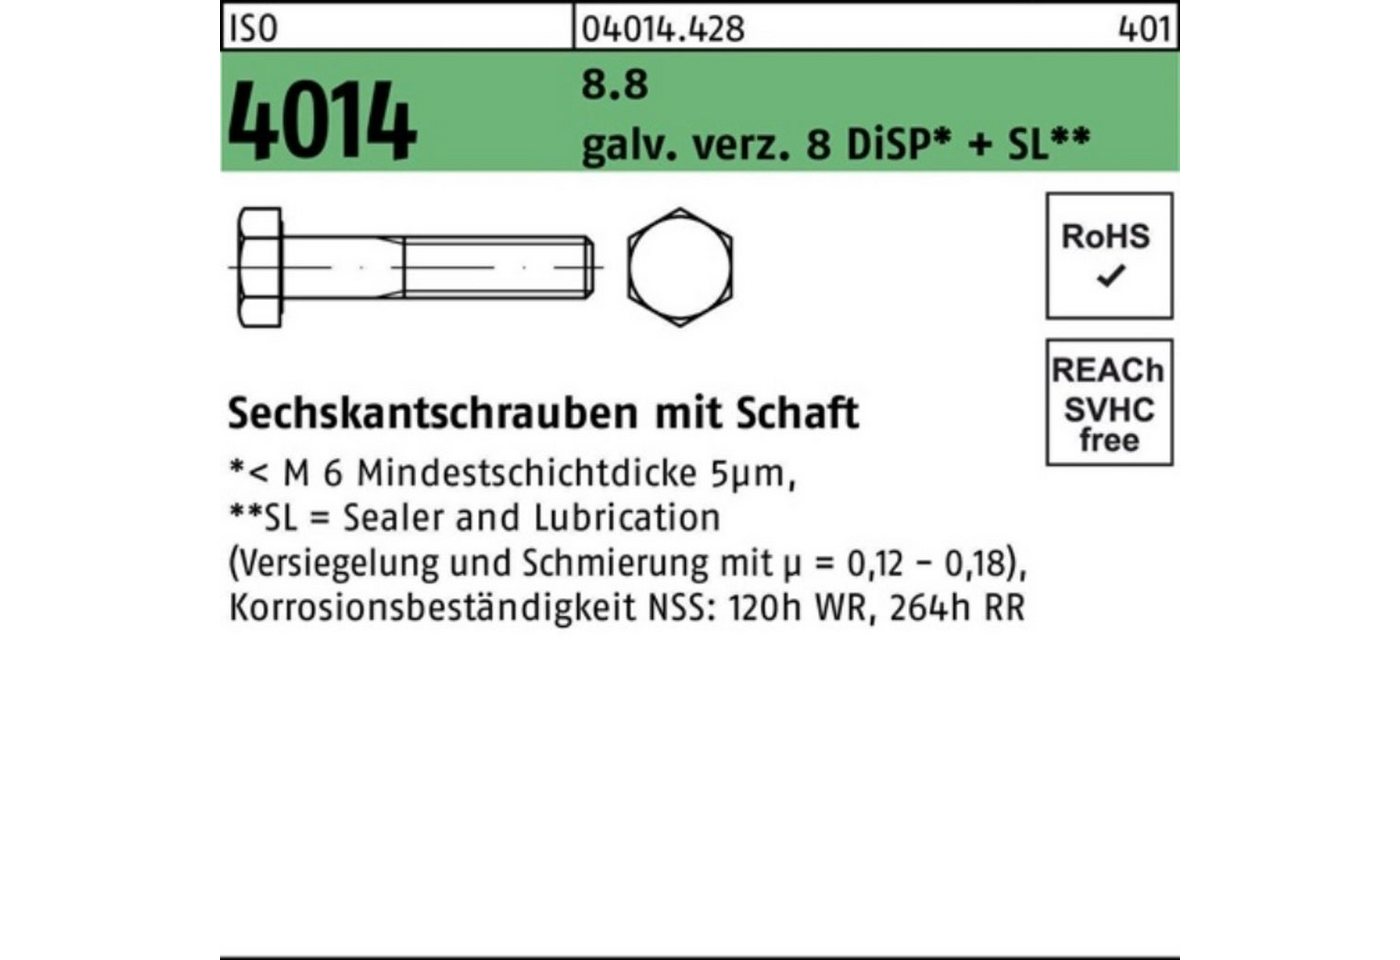 Bufab Sechskantschraube 100er Pack Sechskantschraube ISO 4014 Schaft M14x70 8.8 galv.verz. 8 D von Bufab